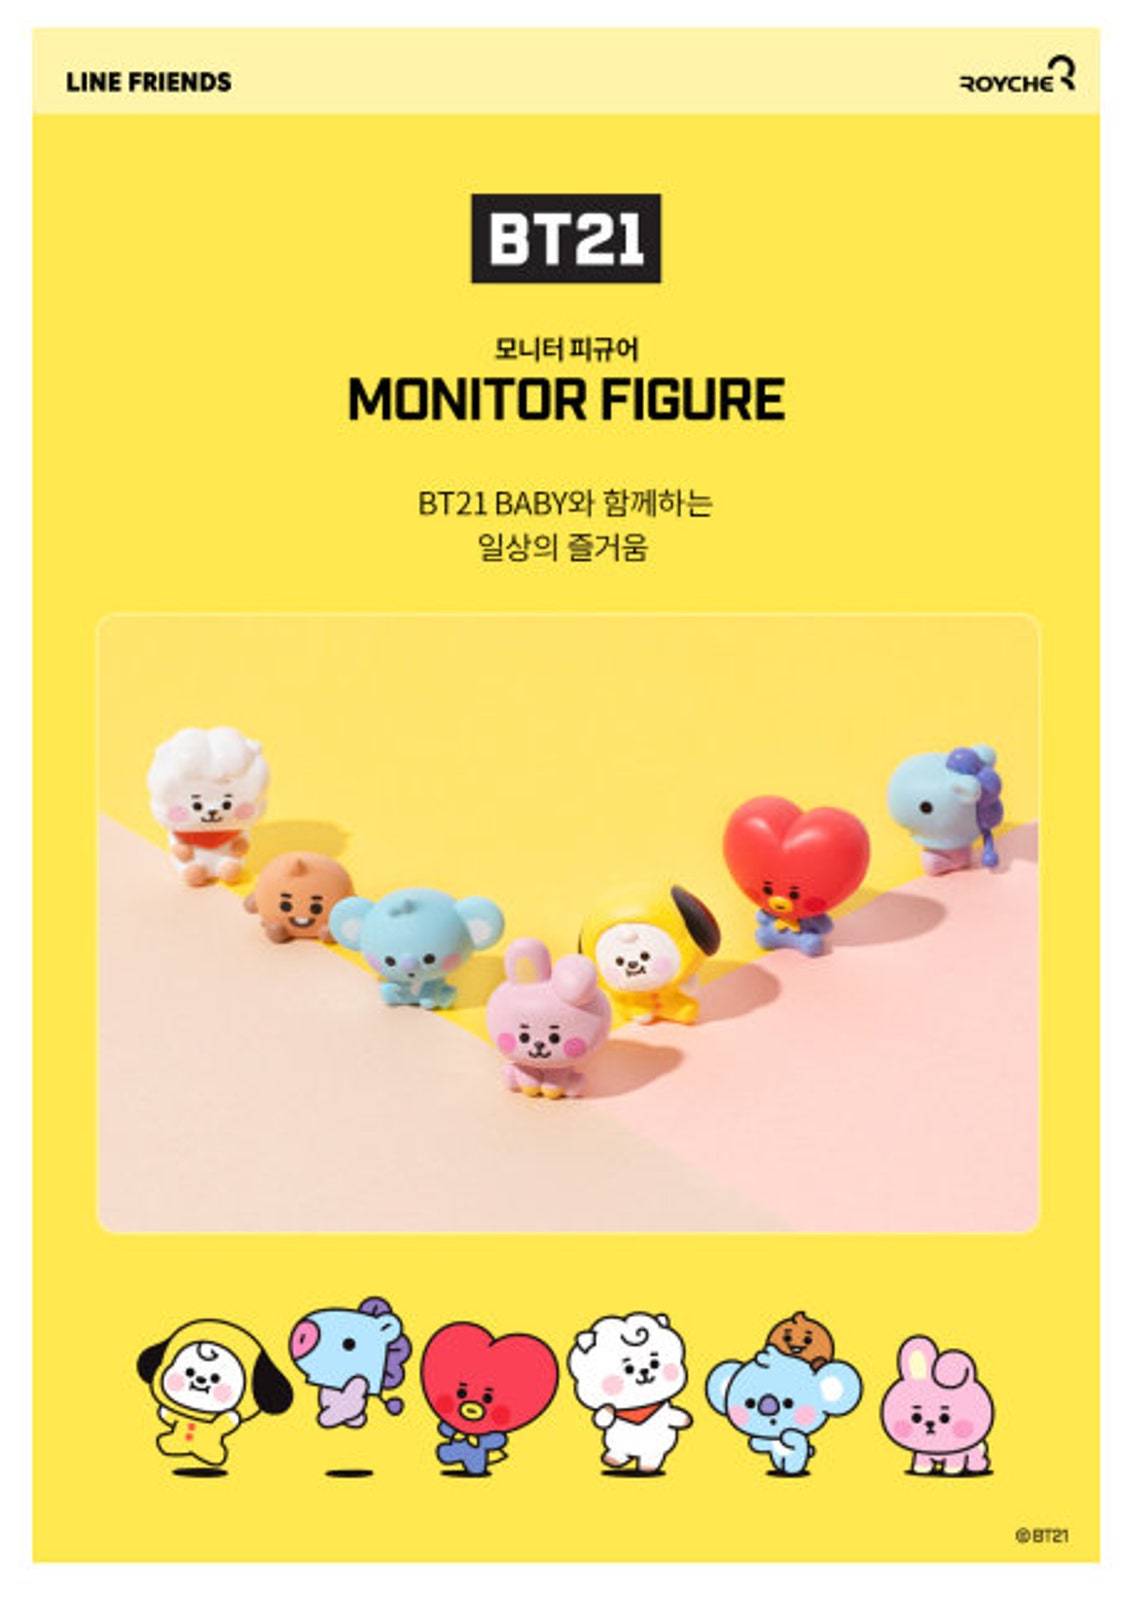 BTS BT21 Line Friends Official Baby Monitor Figure